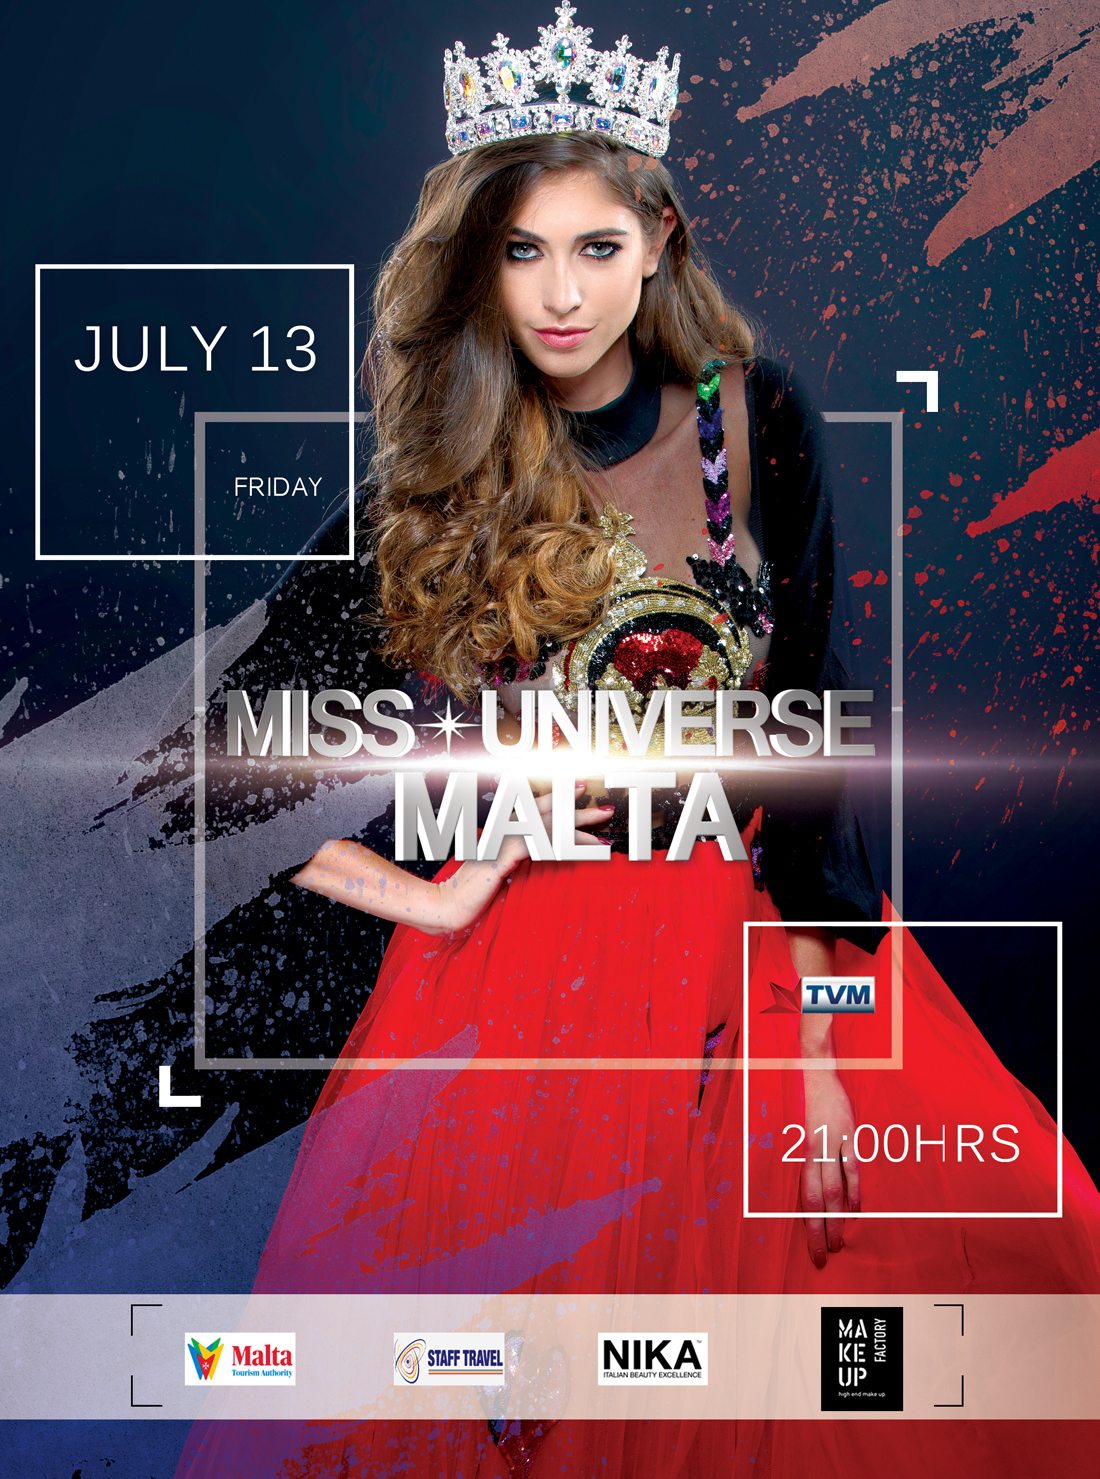 Miss Universe Malta 2018 poster